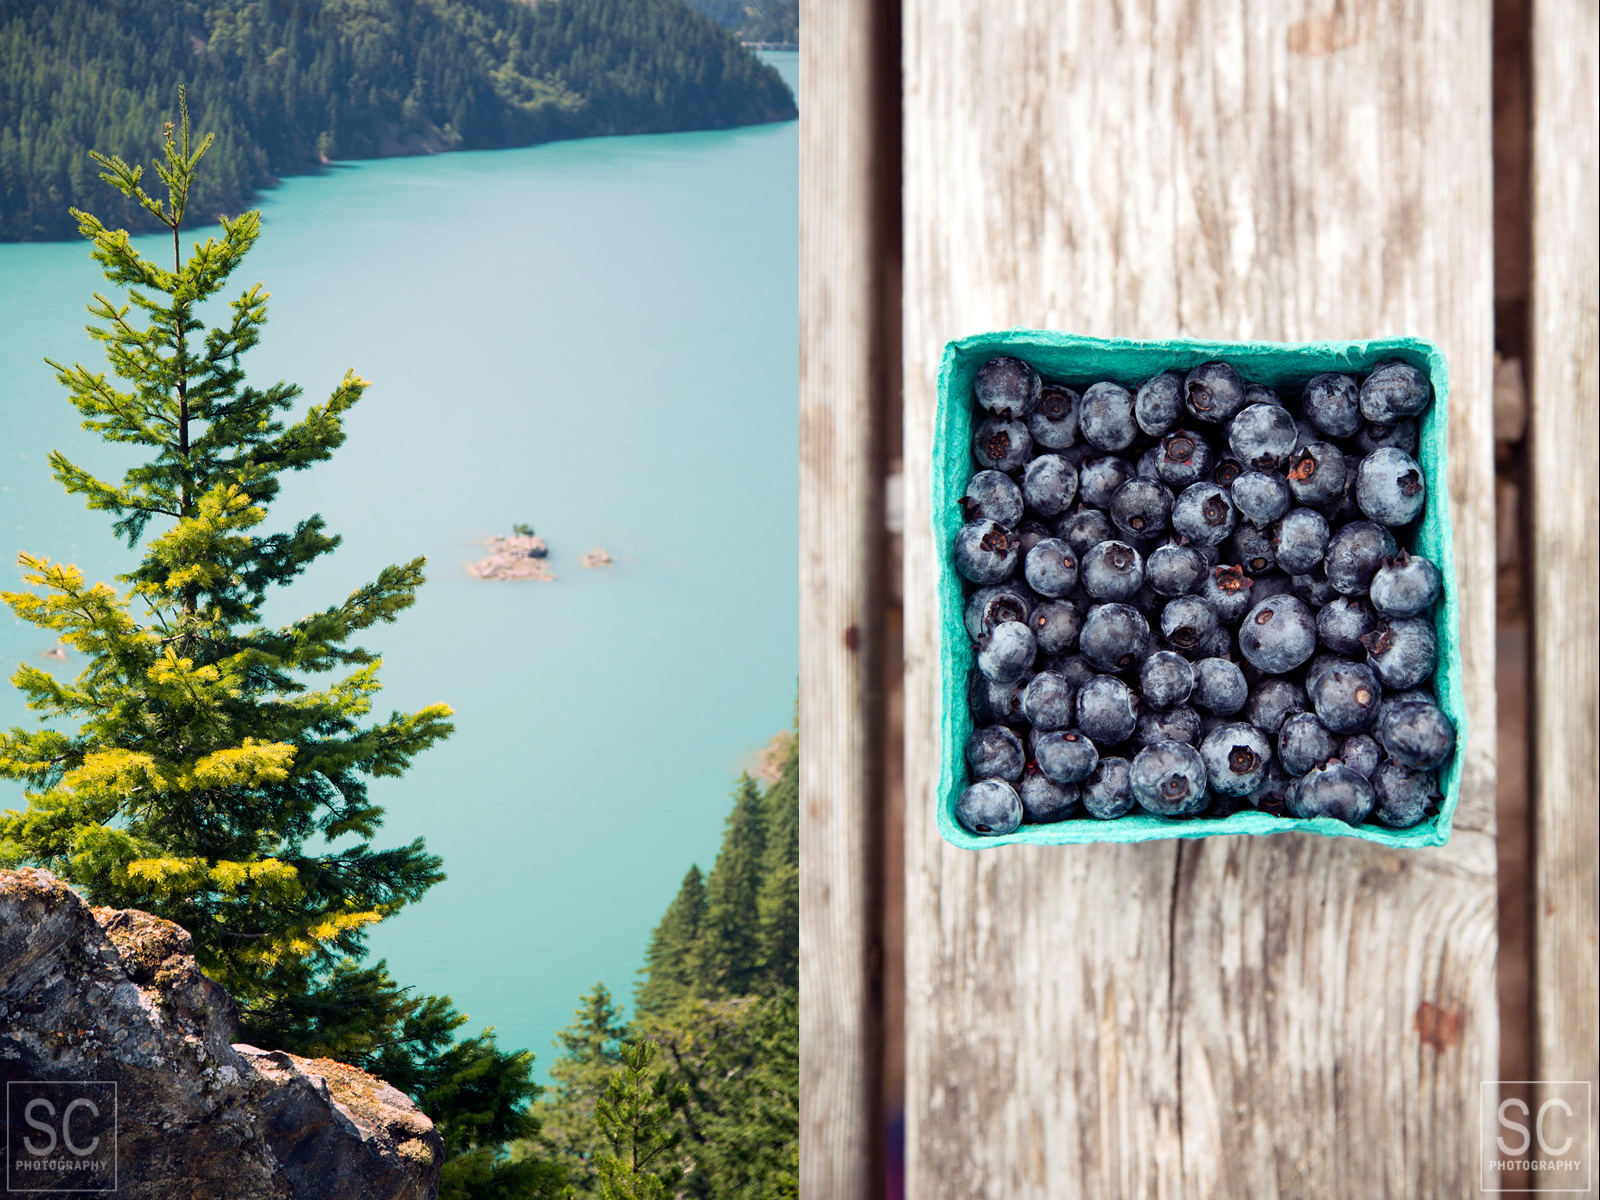 Diablo Lake and fresh blueberries